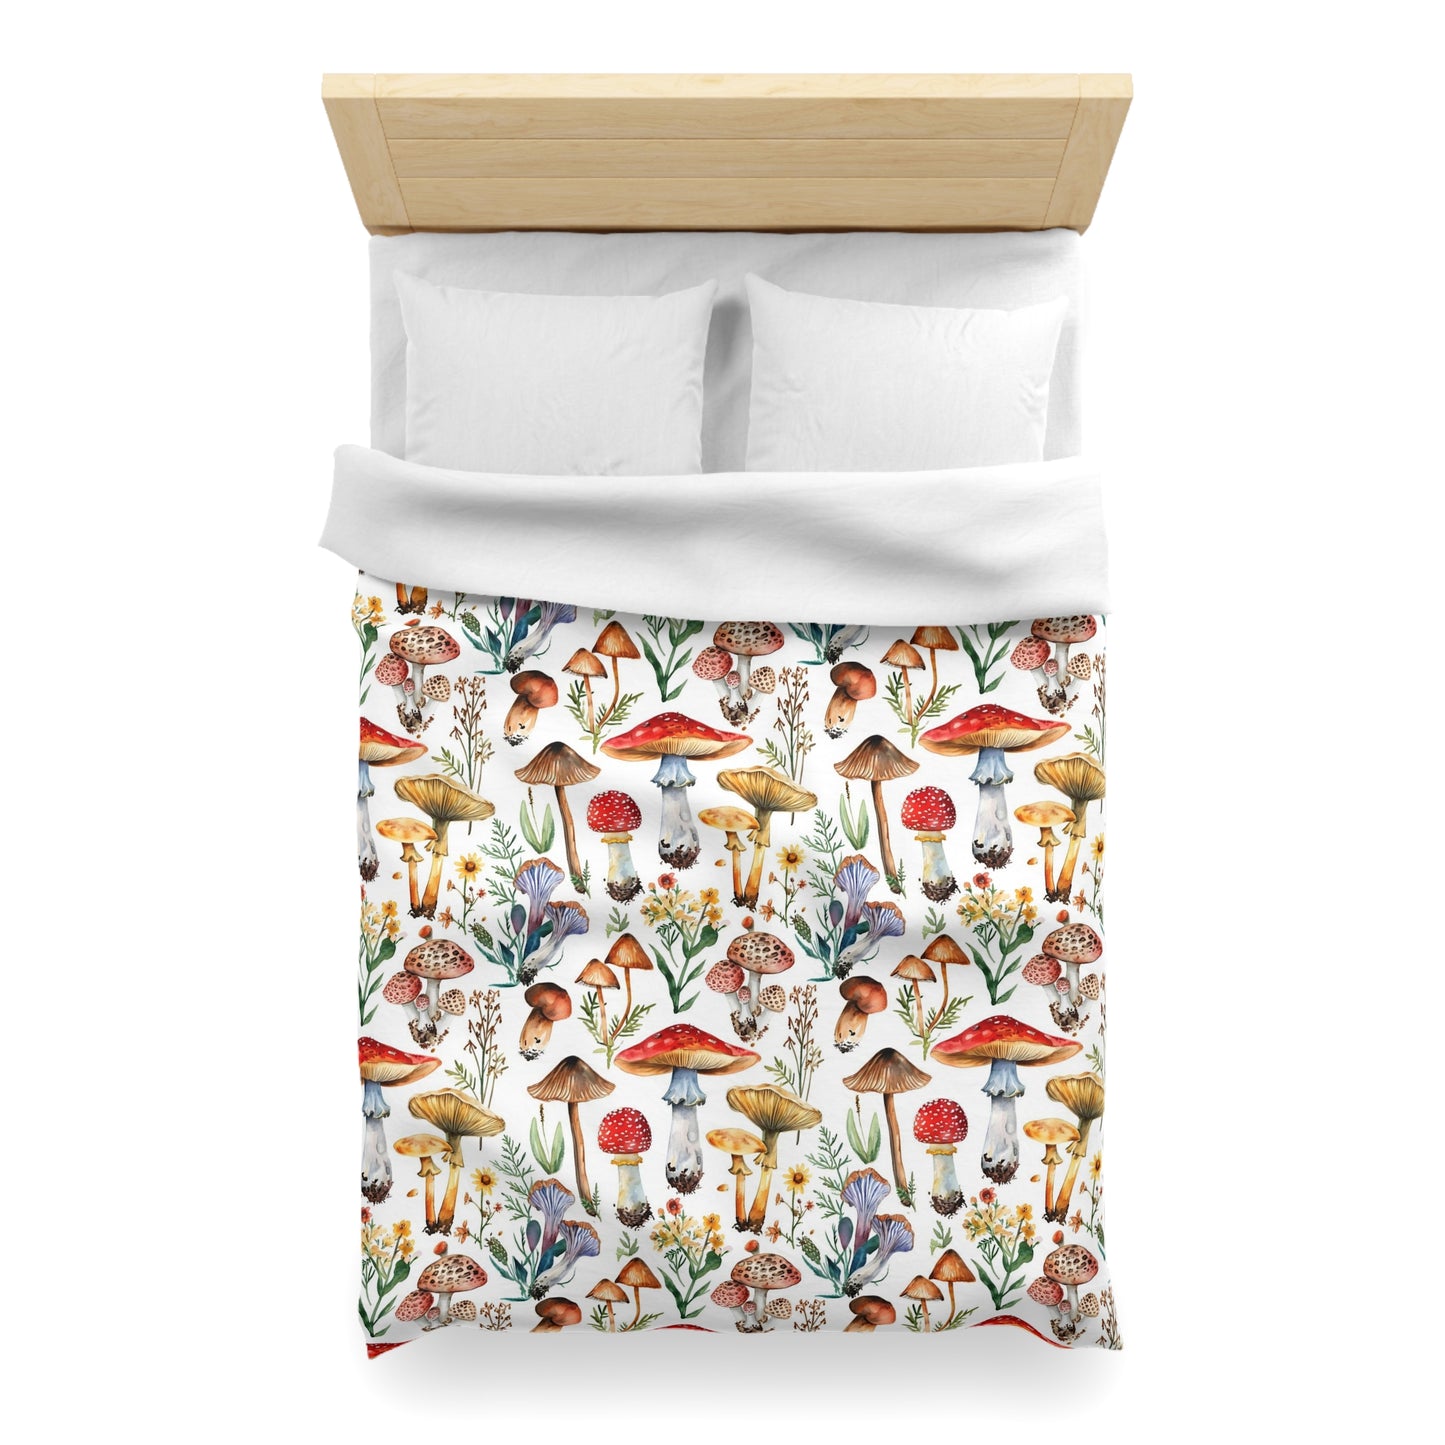 Mushroom Duvet Cover, Cottagecore White Floral Flowers Bedding Queen King Full Twin XL Microfiber Unique Designer Bed Quilt Bedroom